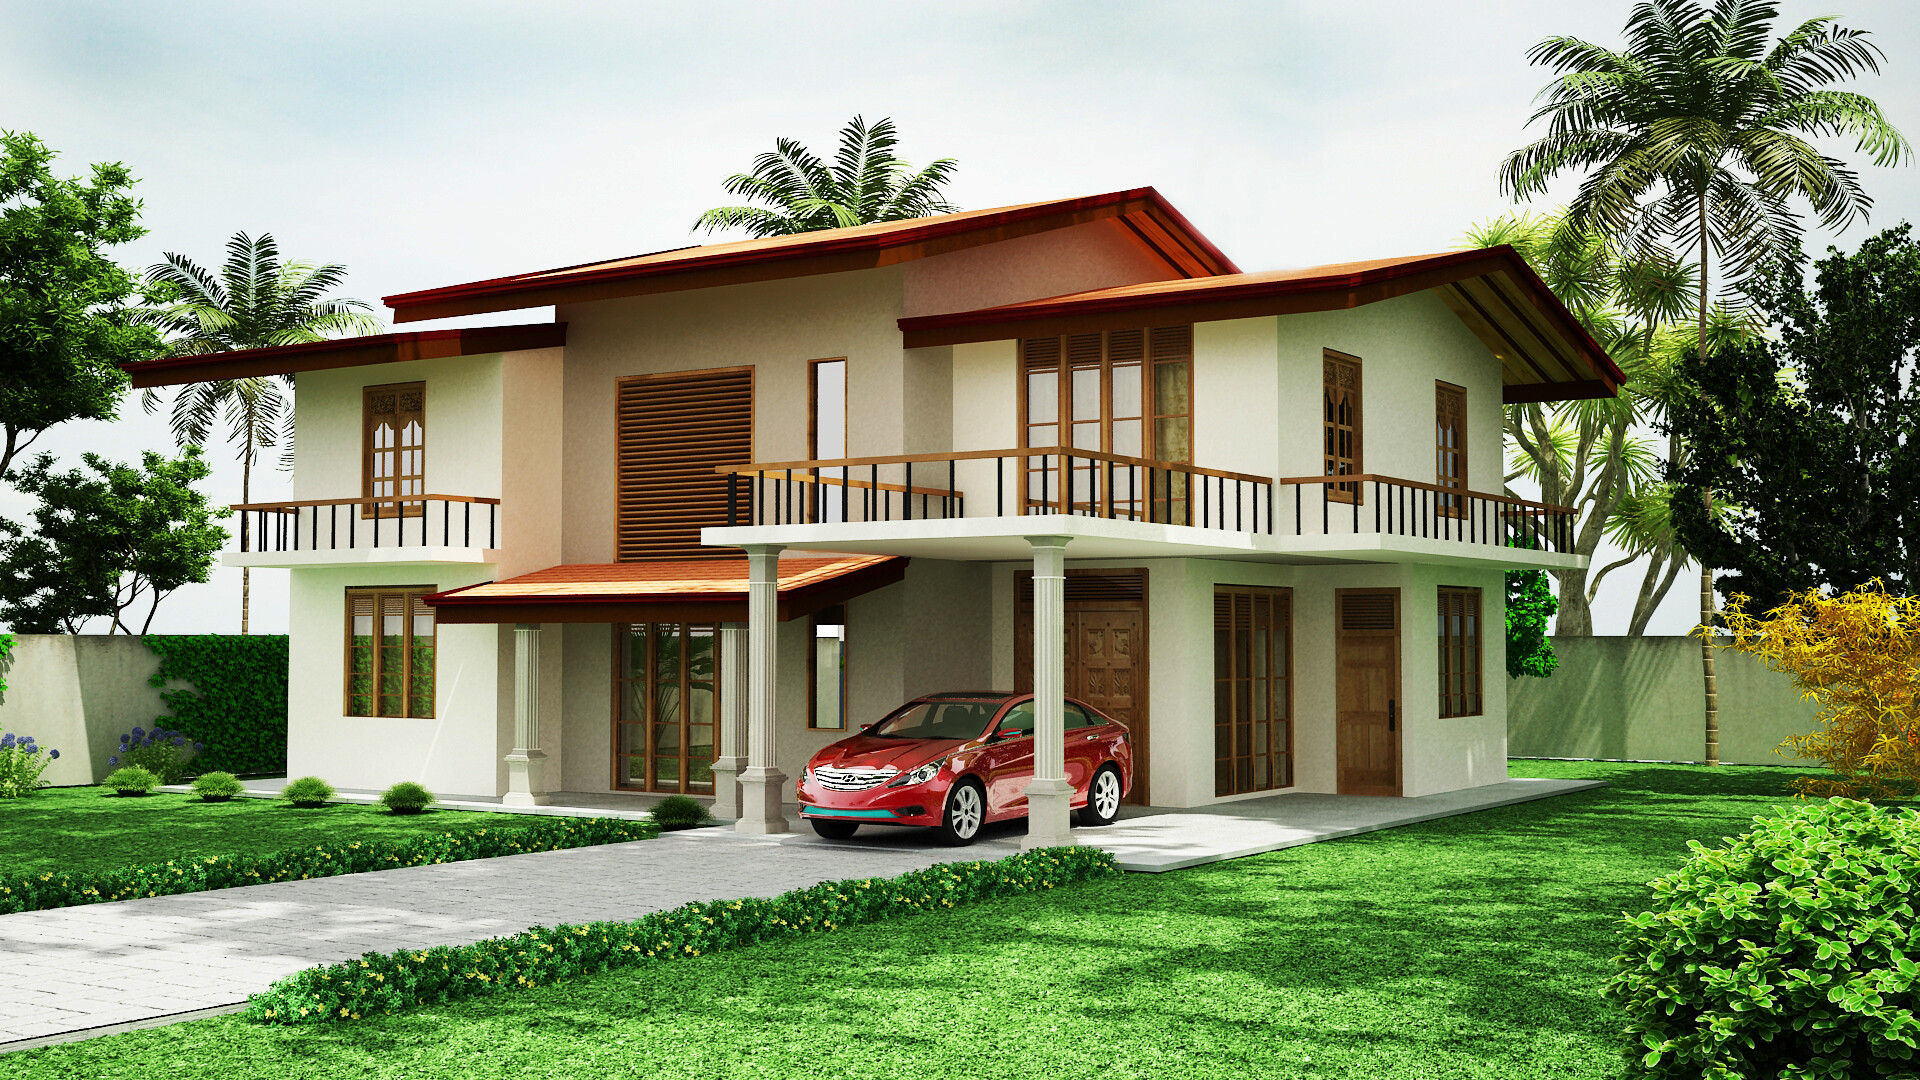 Eranga Janaka Sri Lankan House Designs